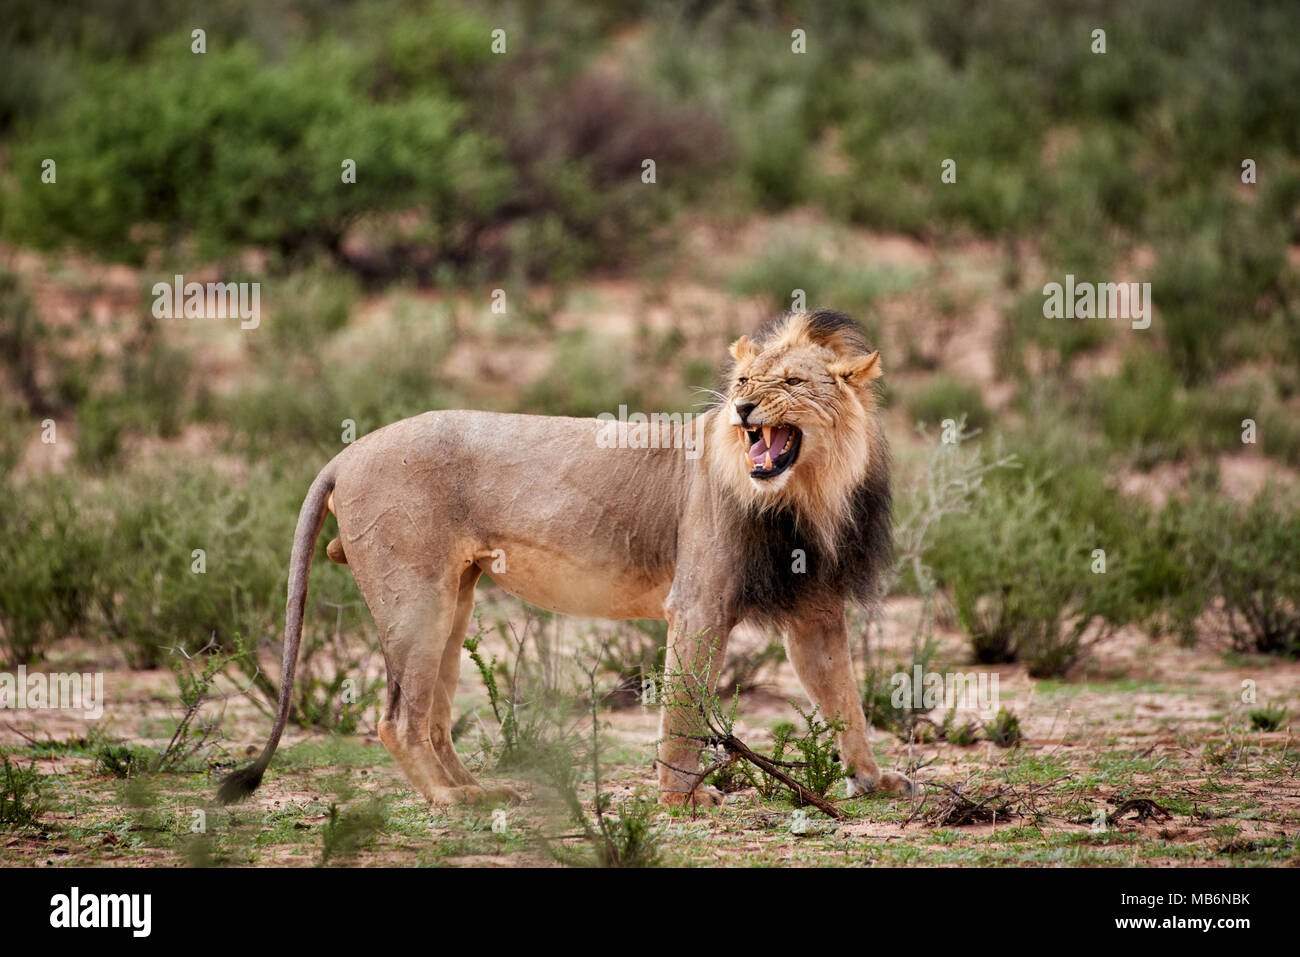 León macho, Panthera leo, flehmen para mujeres del Kalahari, paisaje, el Parque Transfronterizo Kgalagadi, Sudáfrica, África Foto de stock